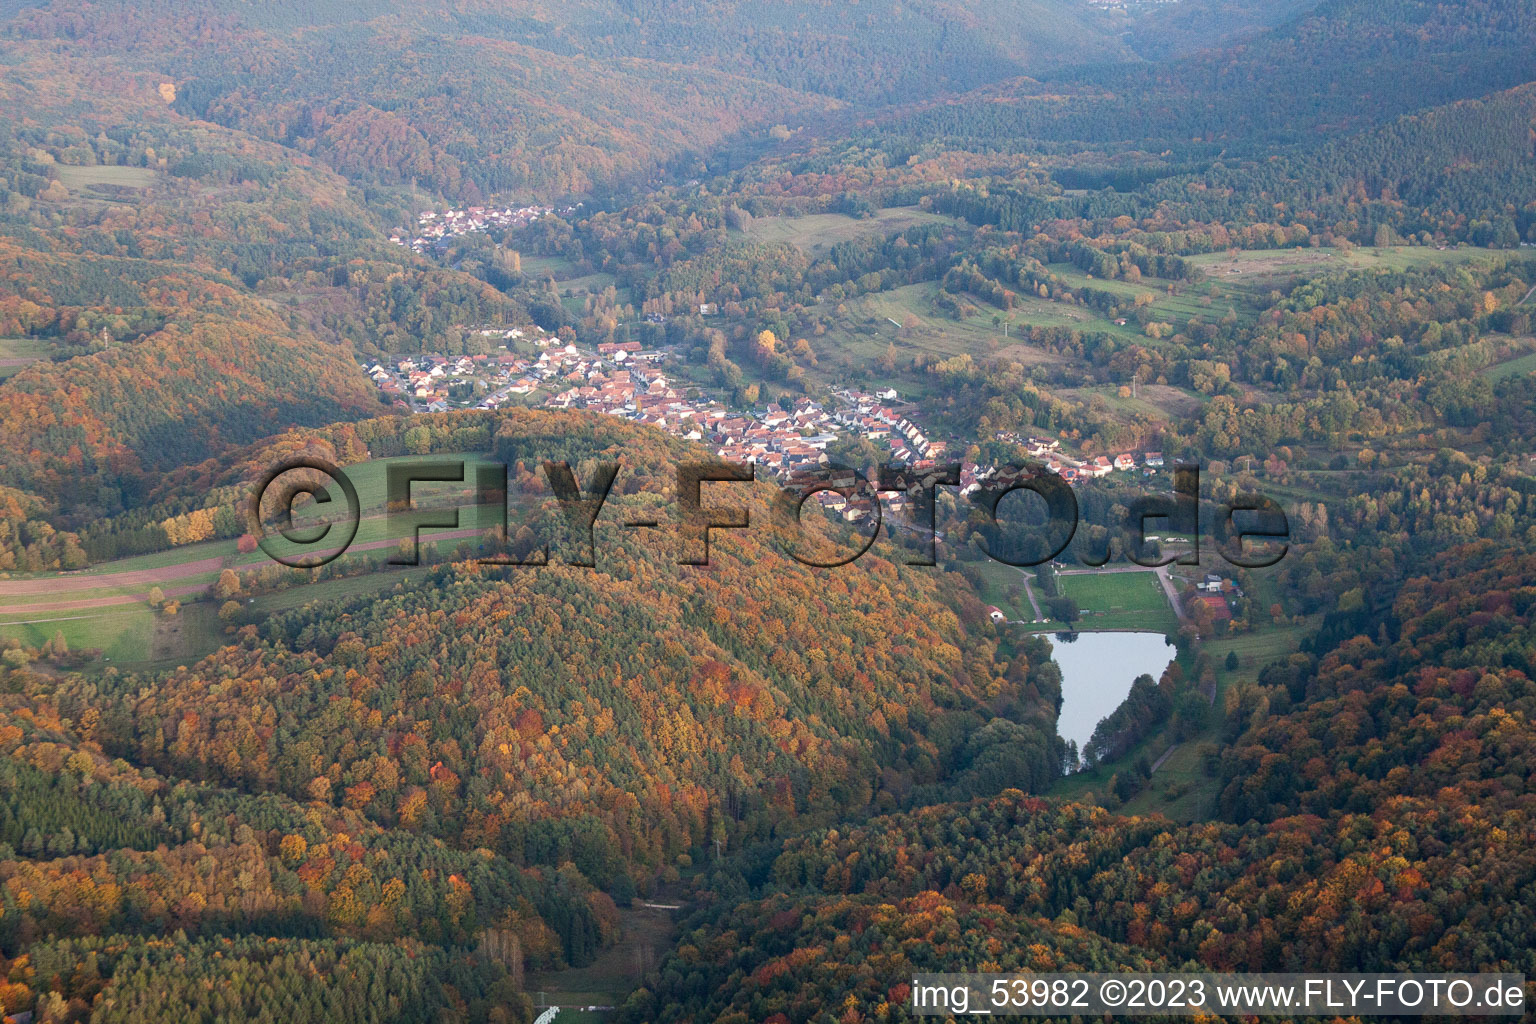 Bird's eye view of Darstein in the state Rhineland-Palatinate, Germany